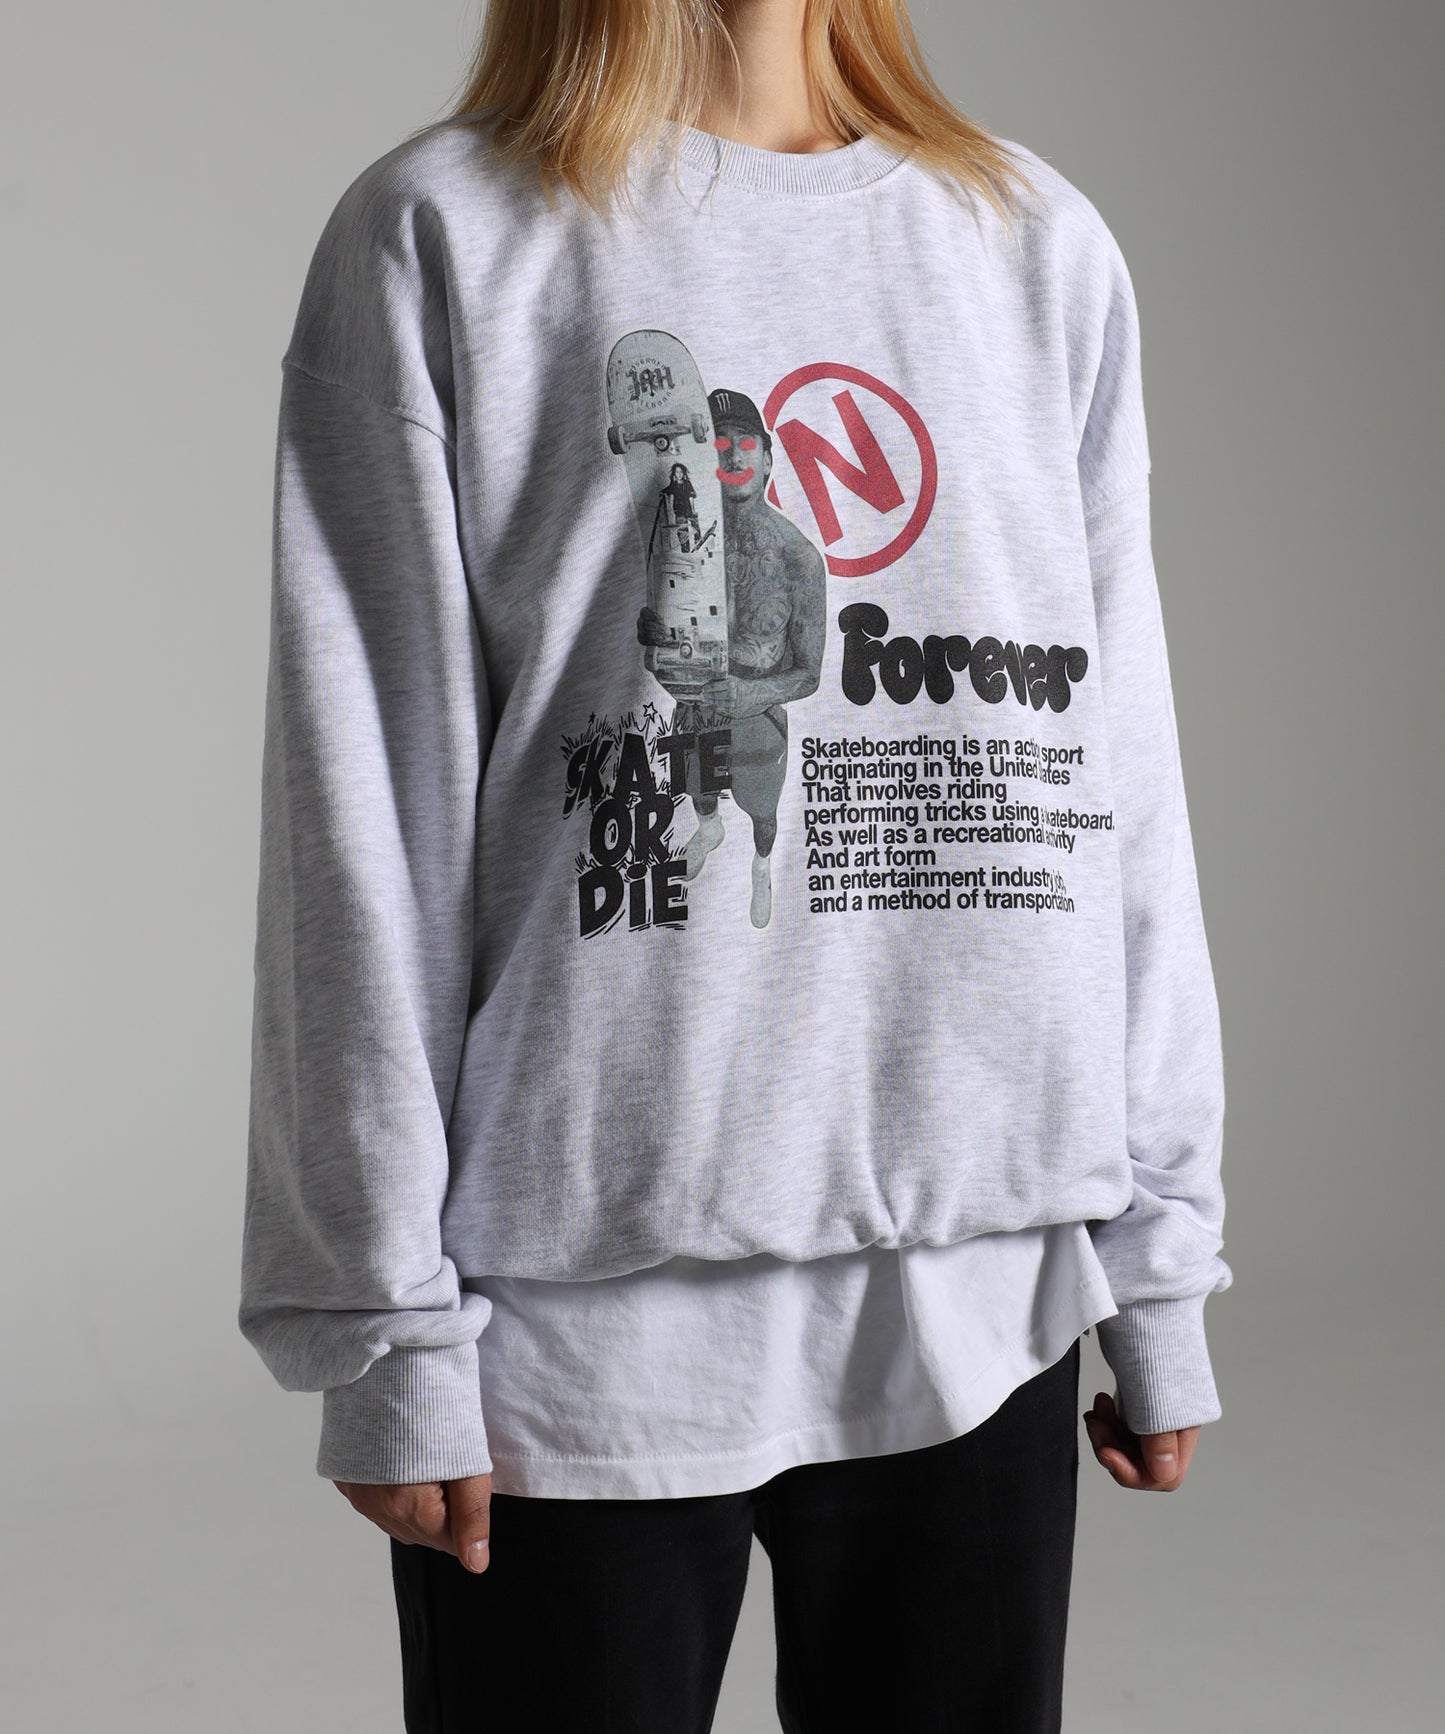 Forever Sweatshirt Designed by JT